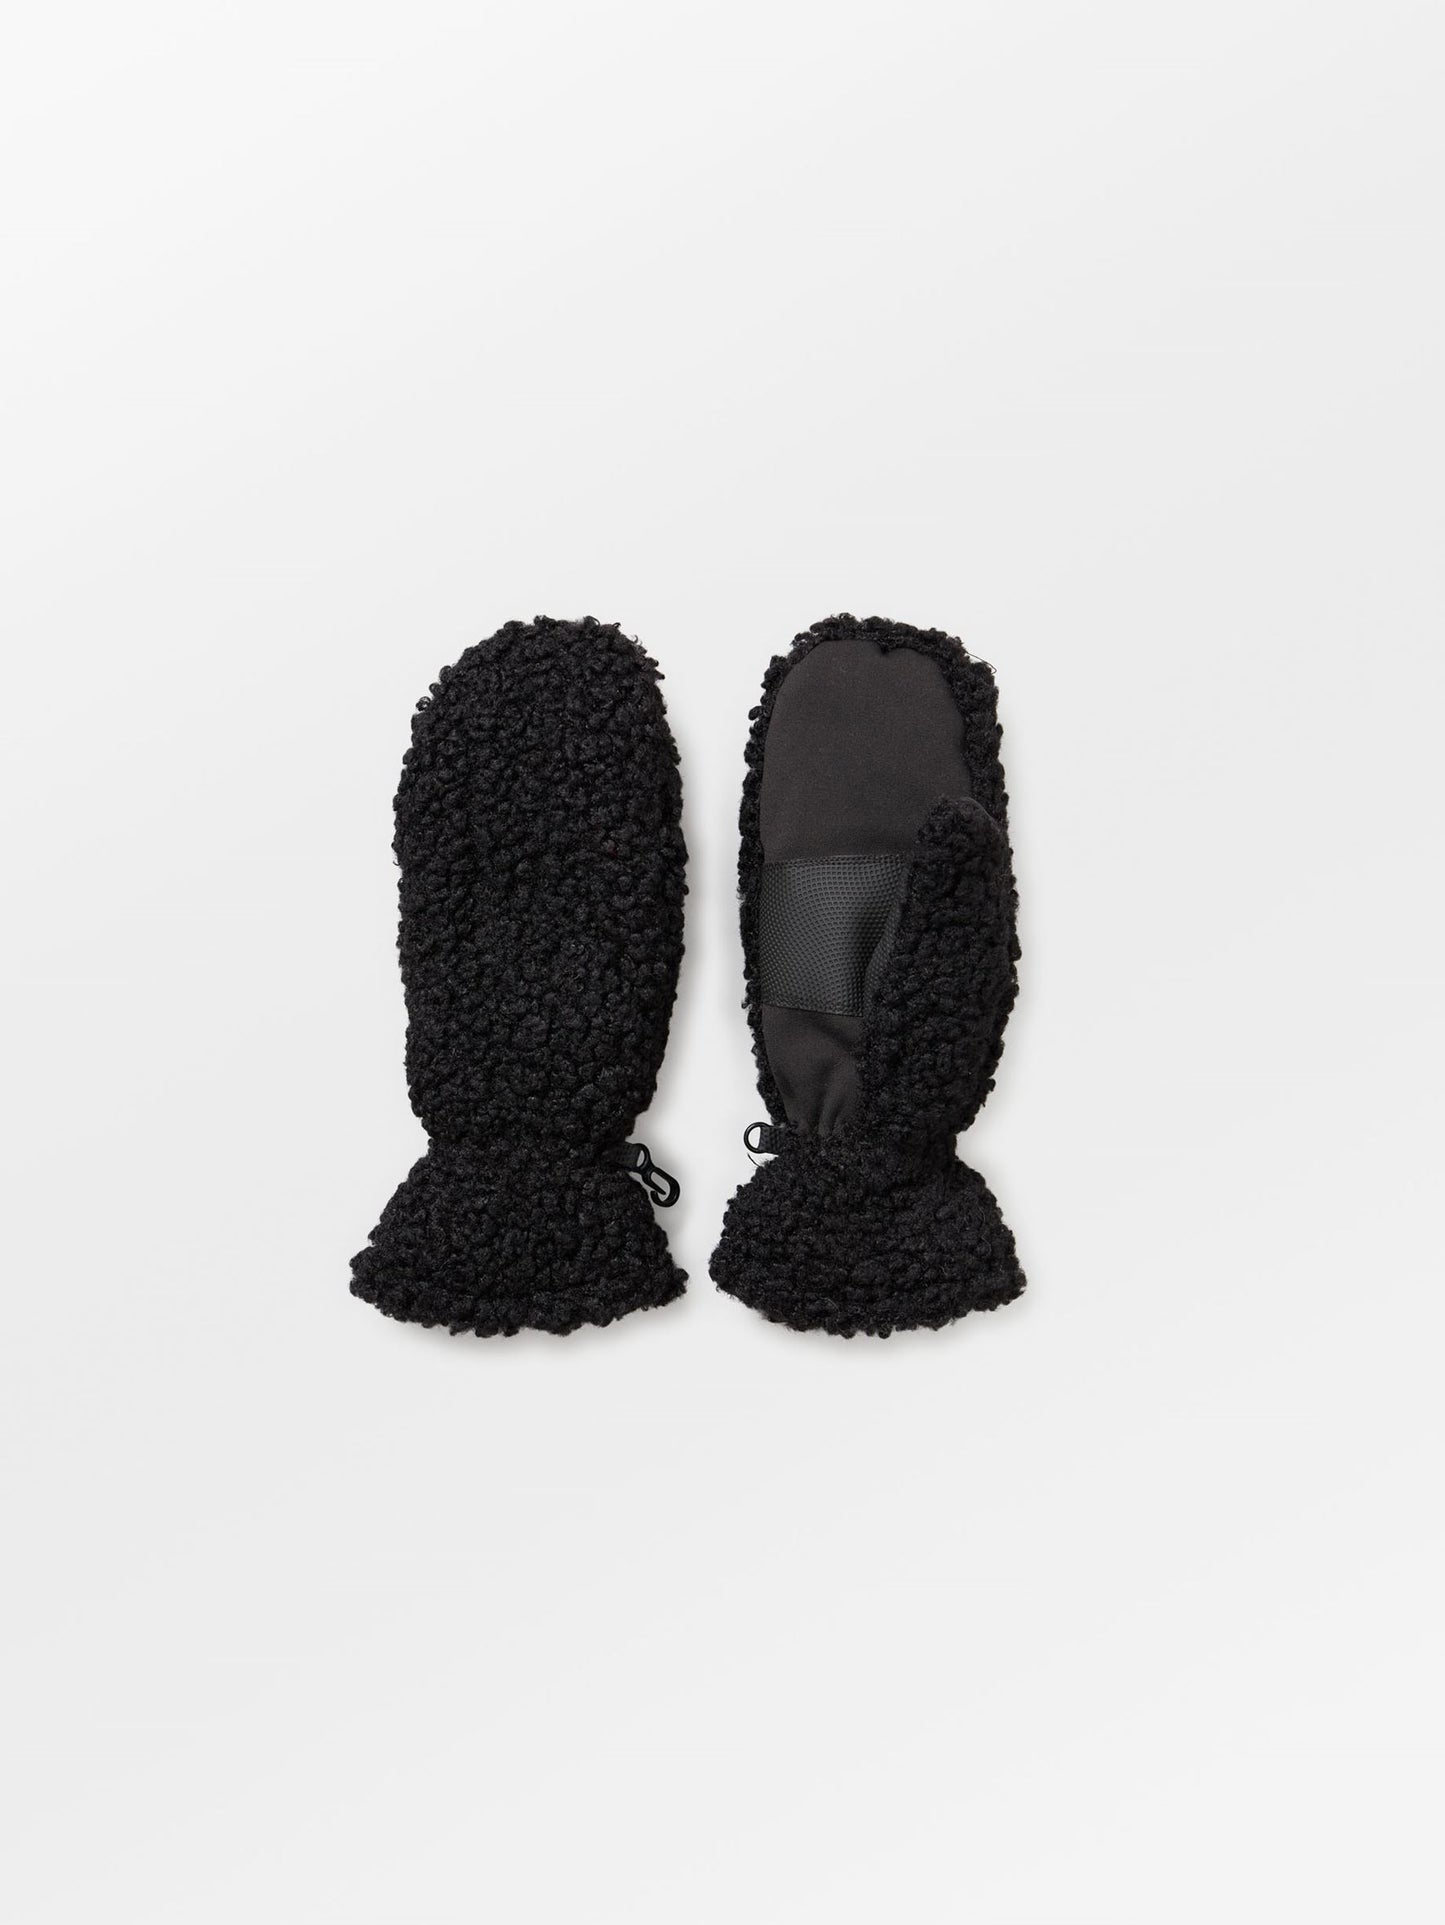 Becksöndergaard, Teddy Bonna Gloves - Black, archive, archive, sale, sale, sale